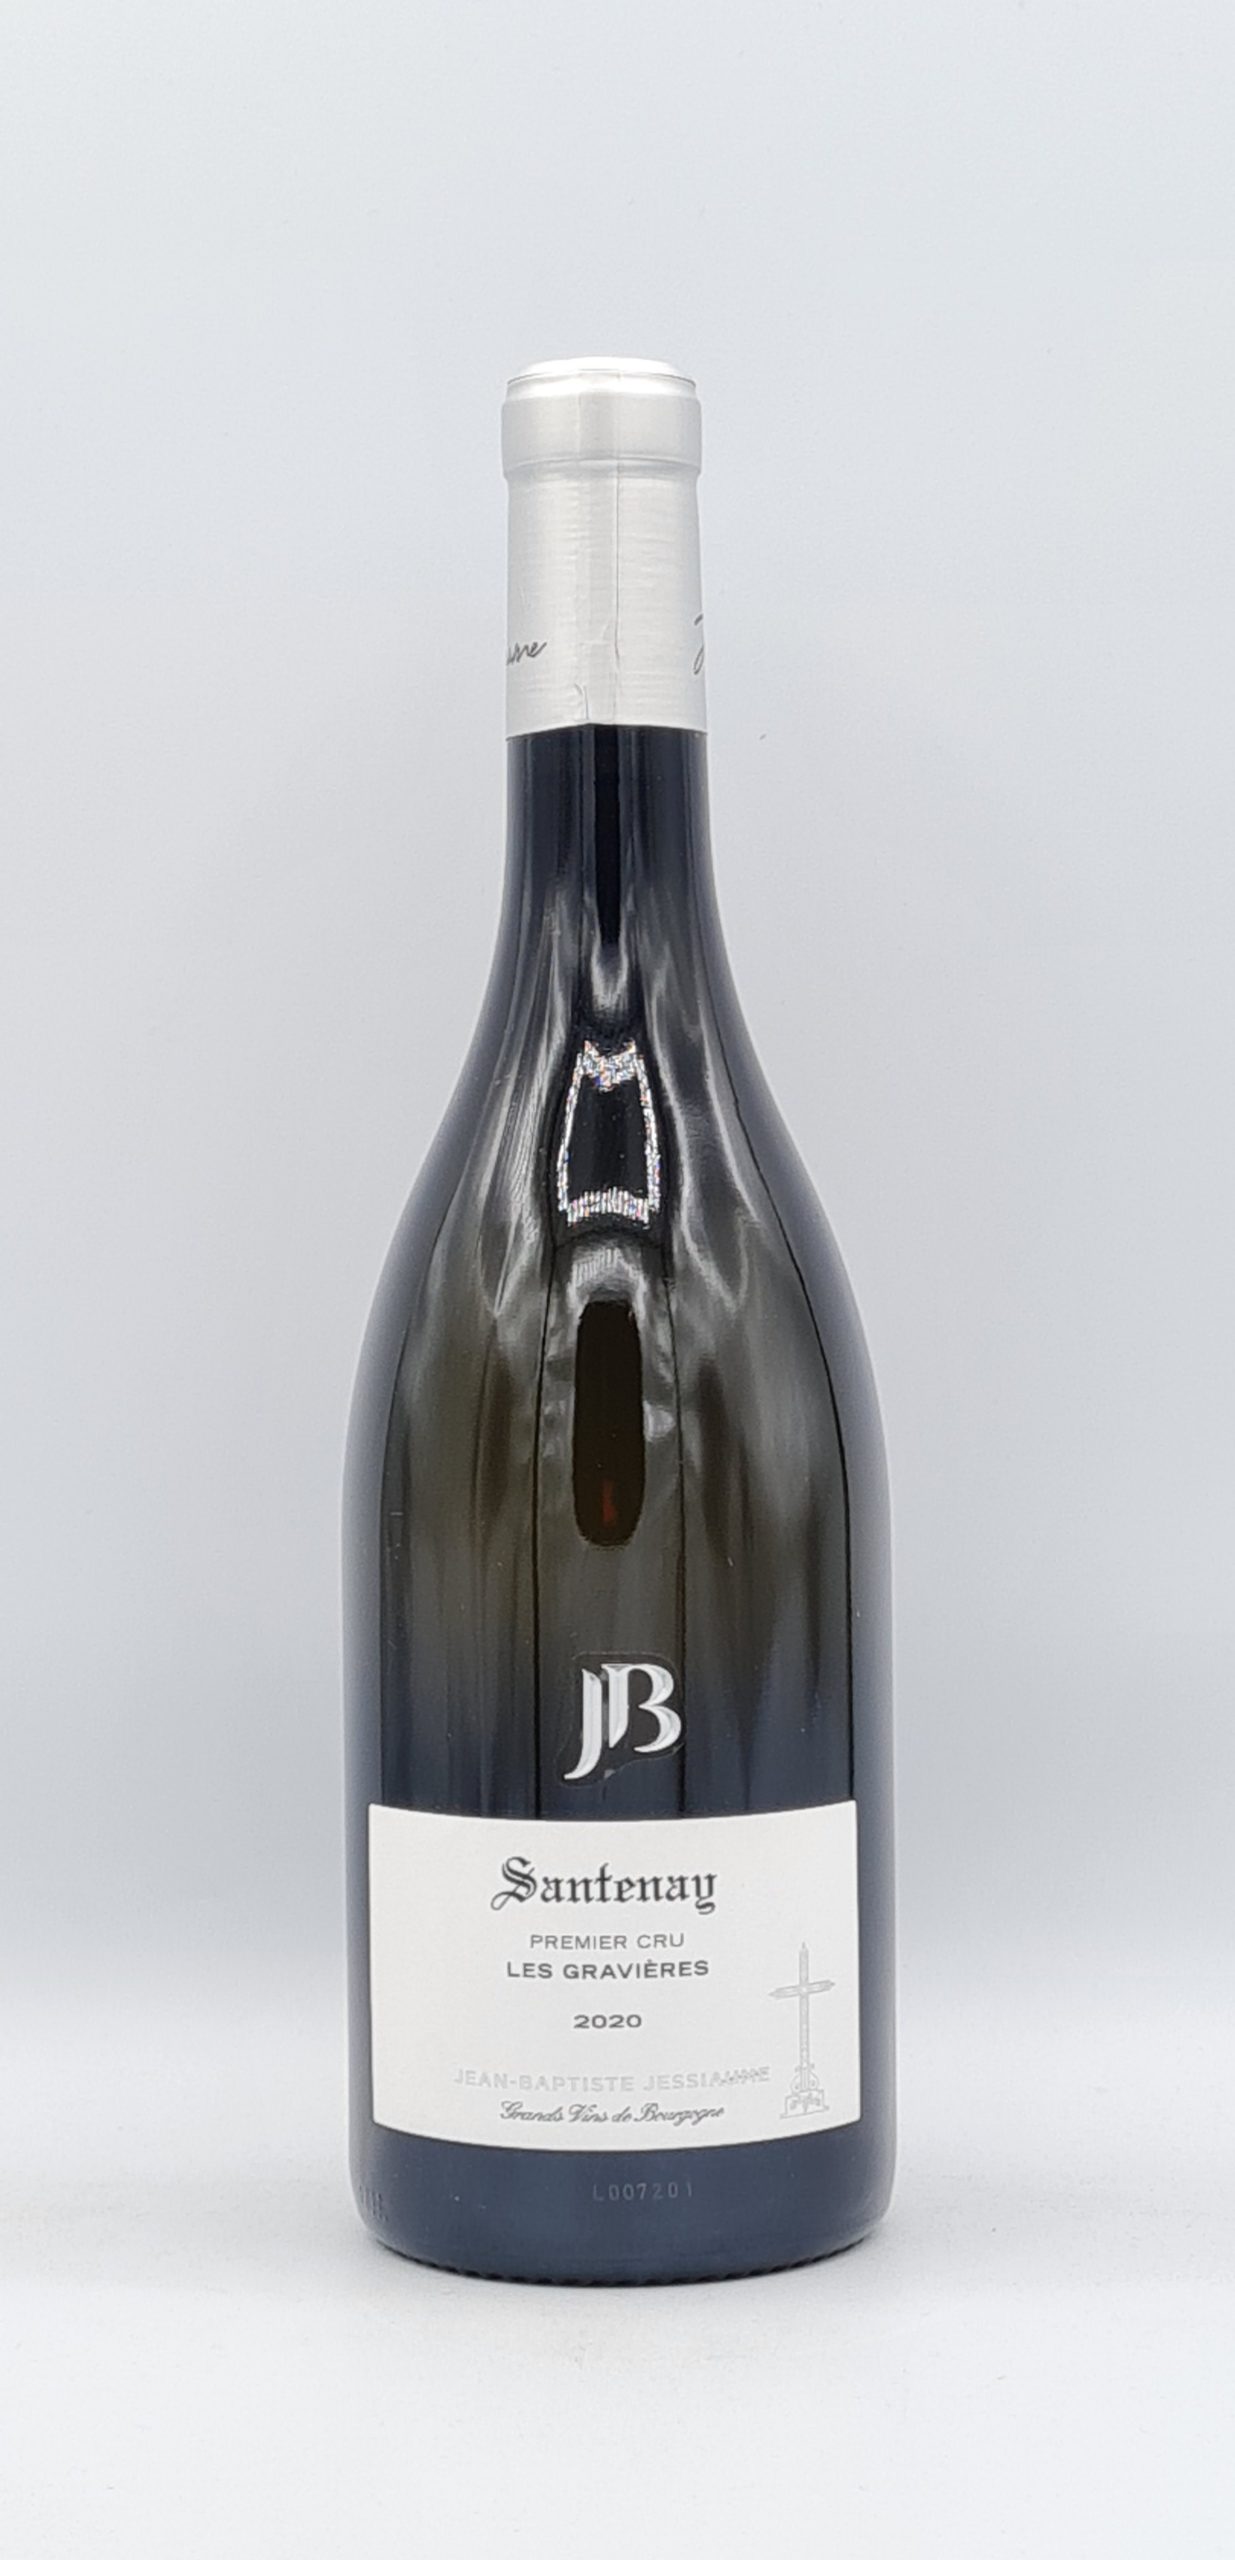 Bourgogne Santenay 1er cru “Les Gravières” 2020 Domaine JB Jessiaume